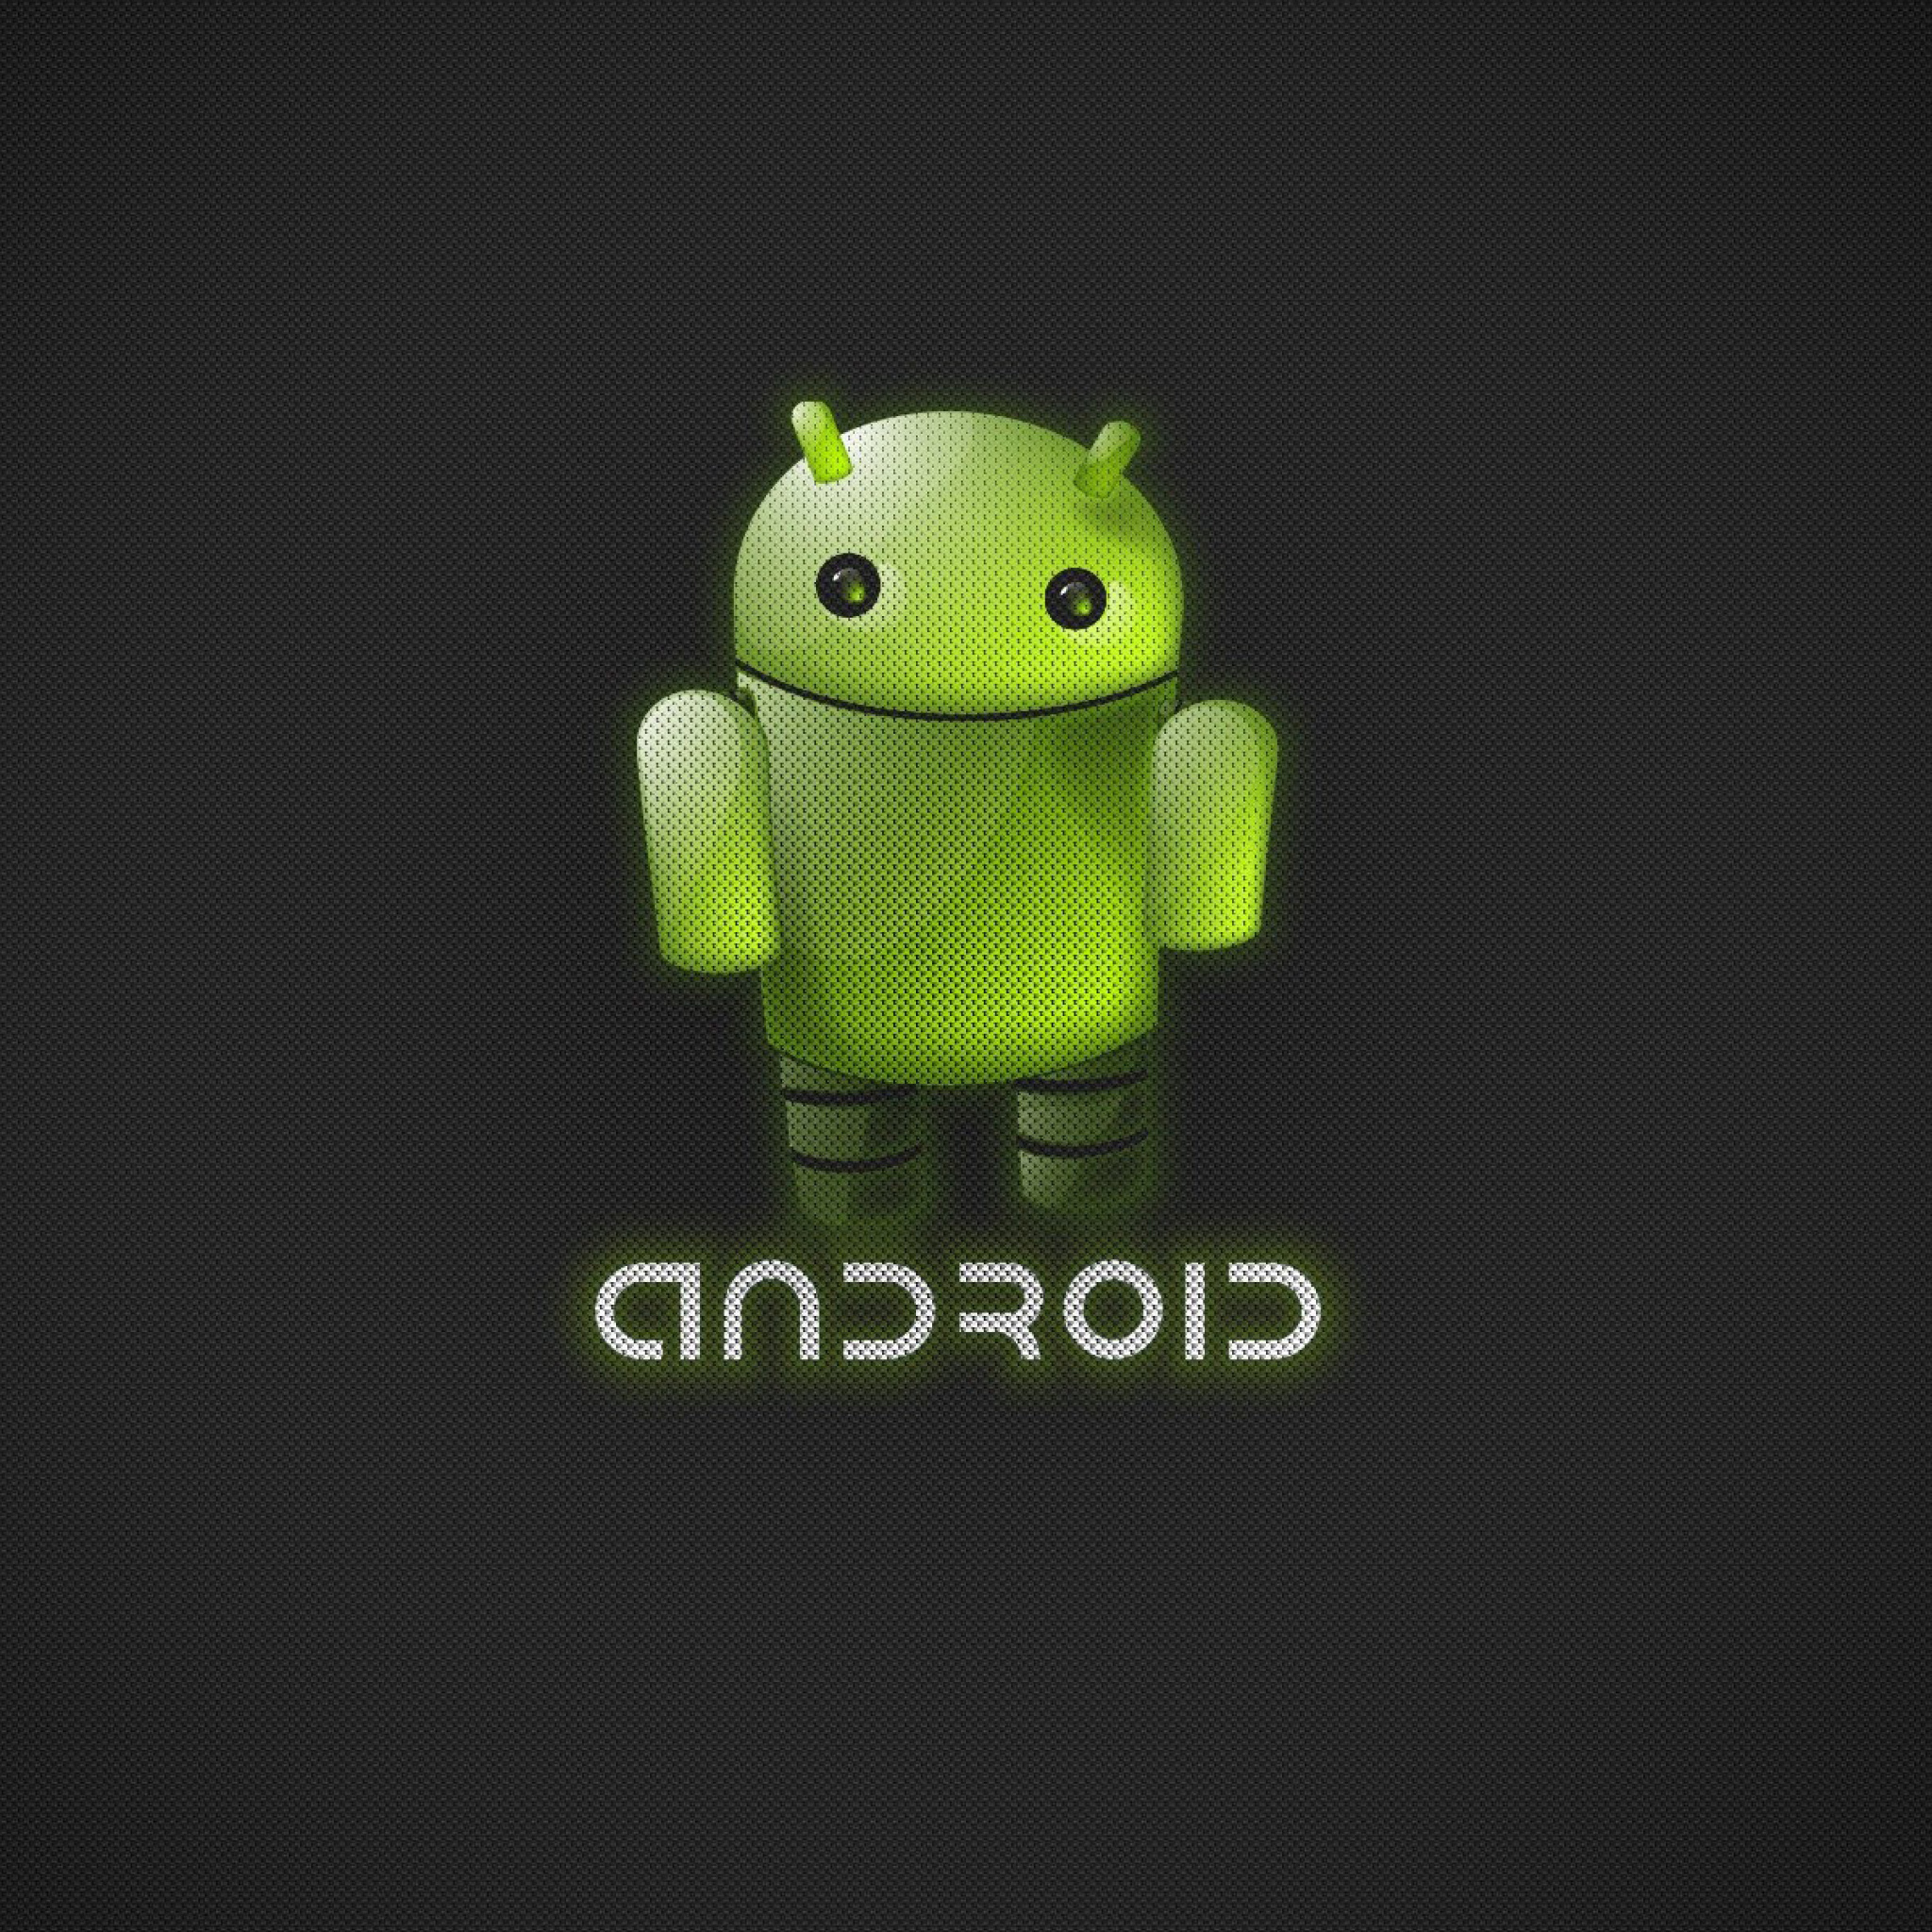 Android 5.0 Lollipop wallpaper 2048x2048